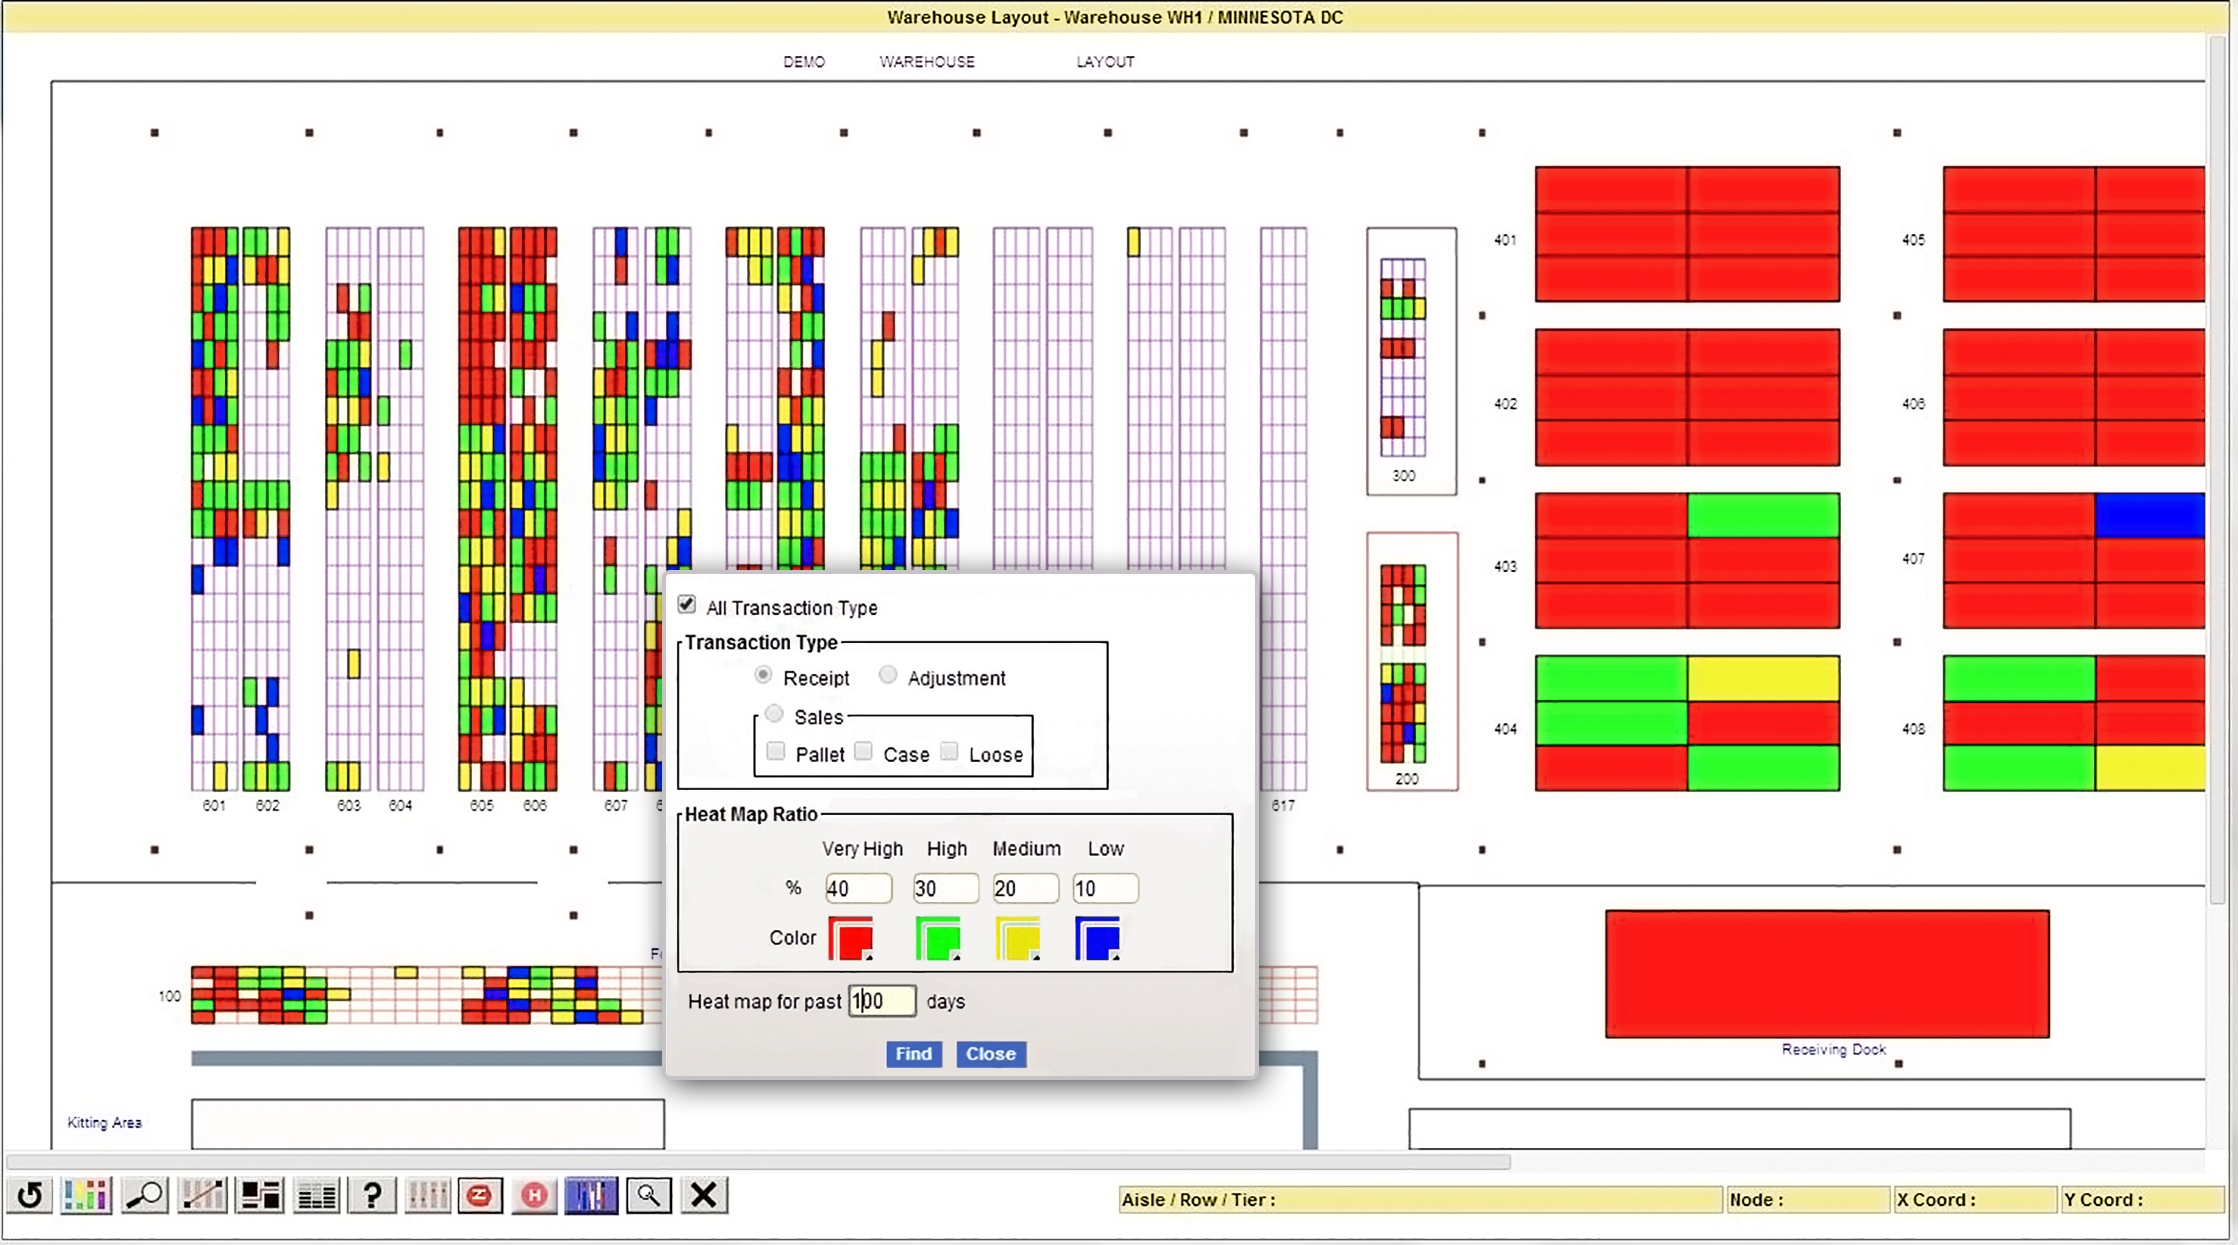 Softeon Warehouse Management System (WMS) Software - 4